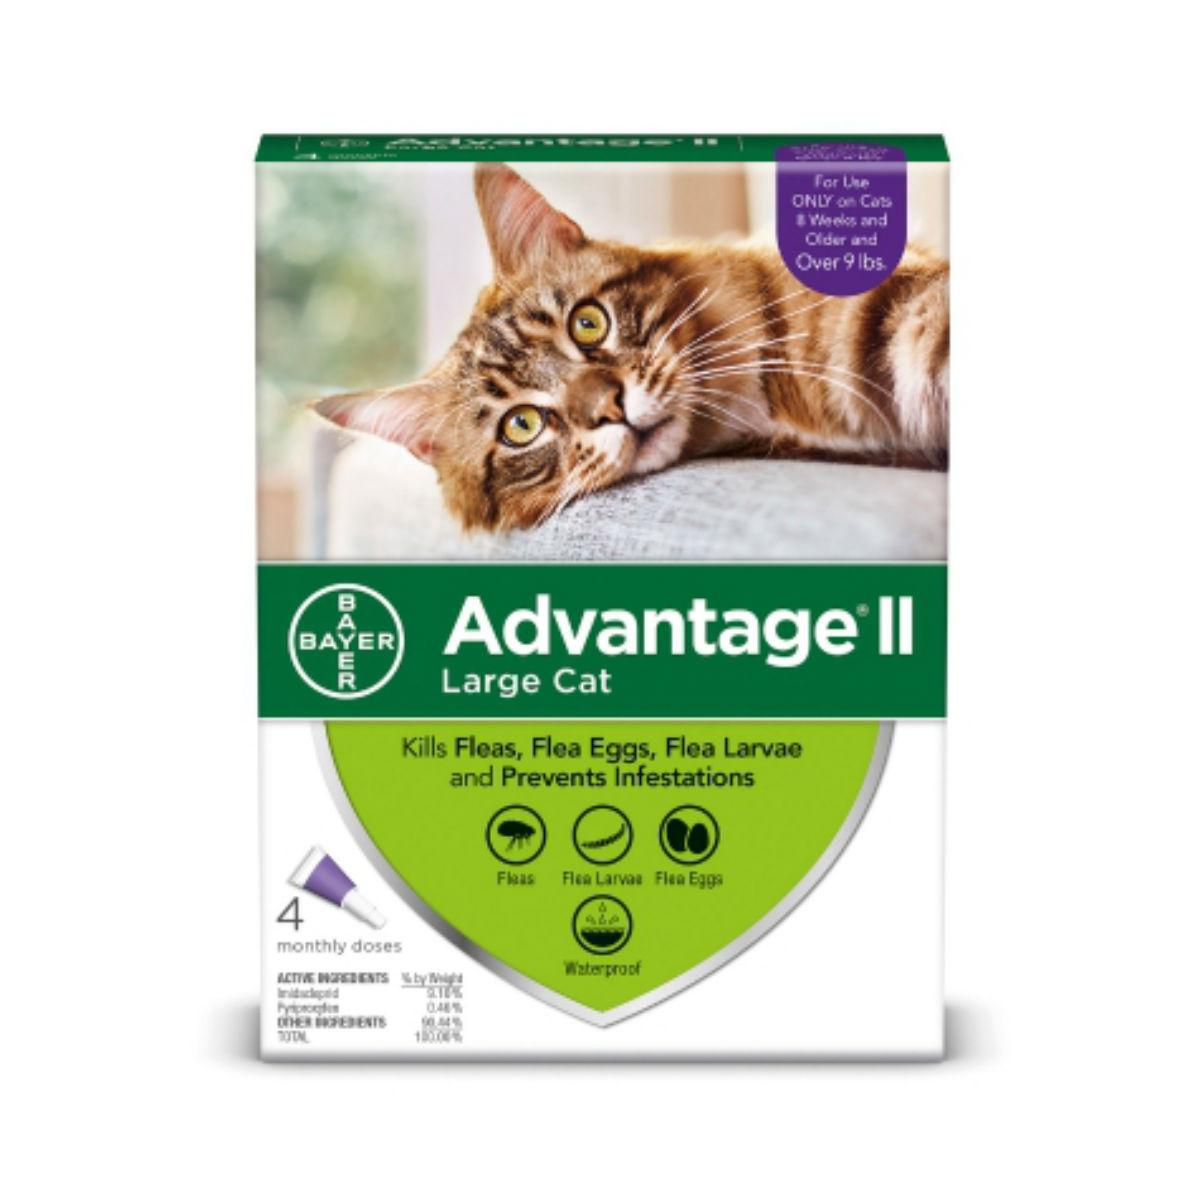 advantage-2-flea-control-cat-treatment-4-month-supply